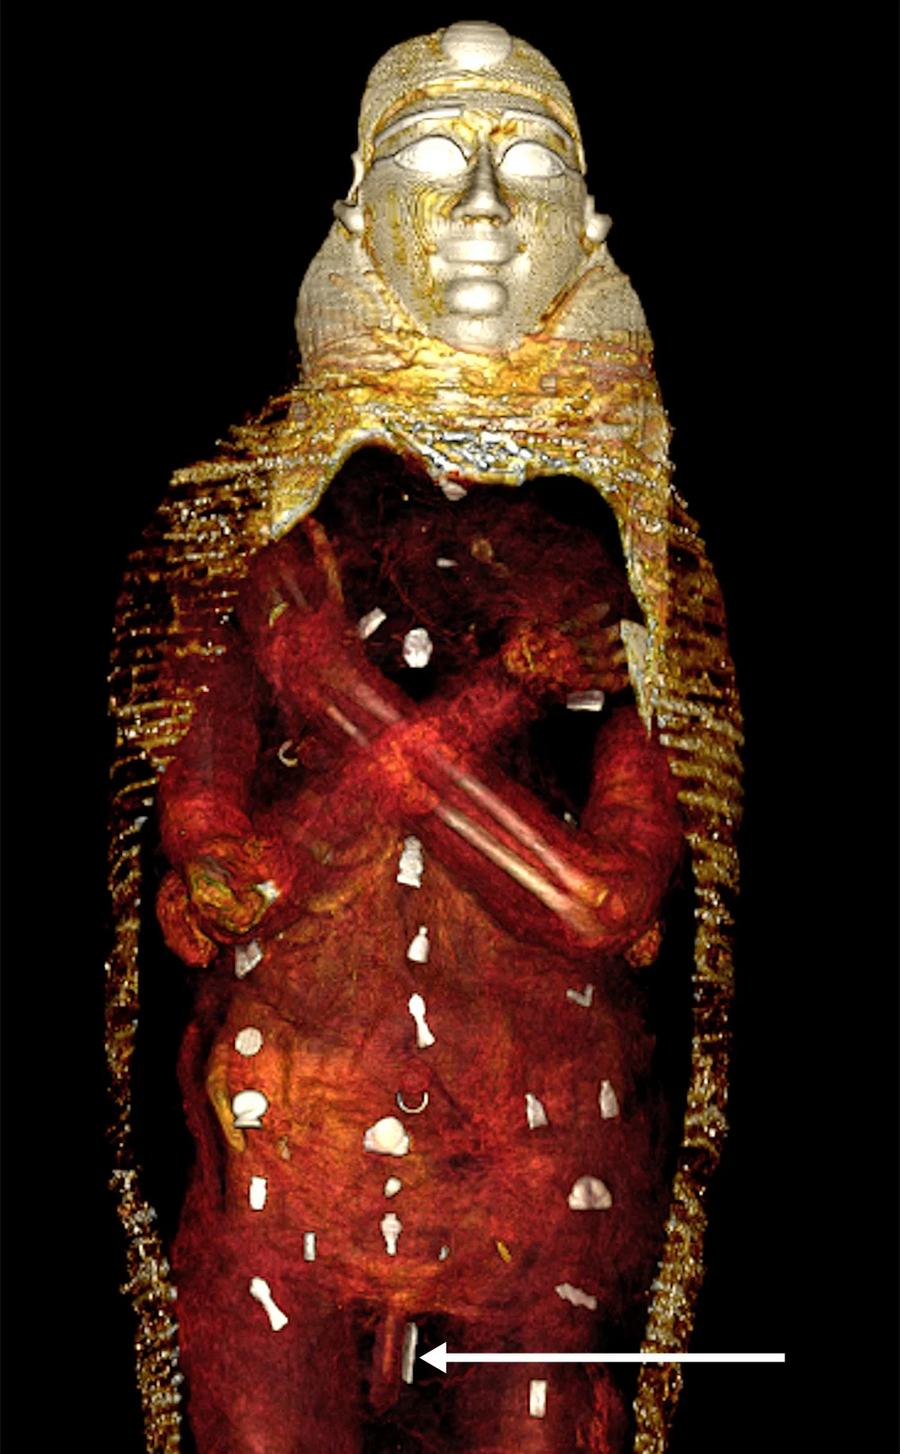 frontiers-medicine-golden-boy-mummy-showcase-egyptian-beliefs_04-1.png